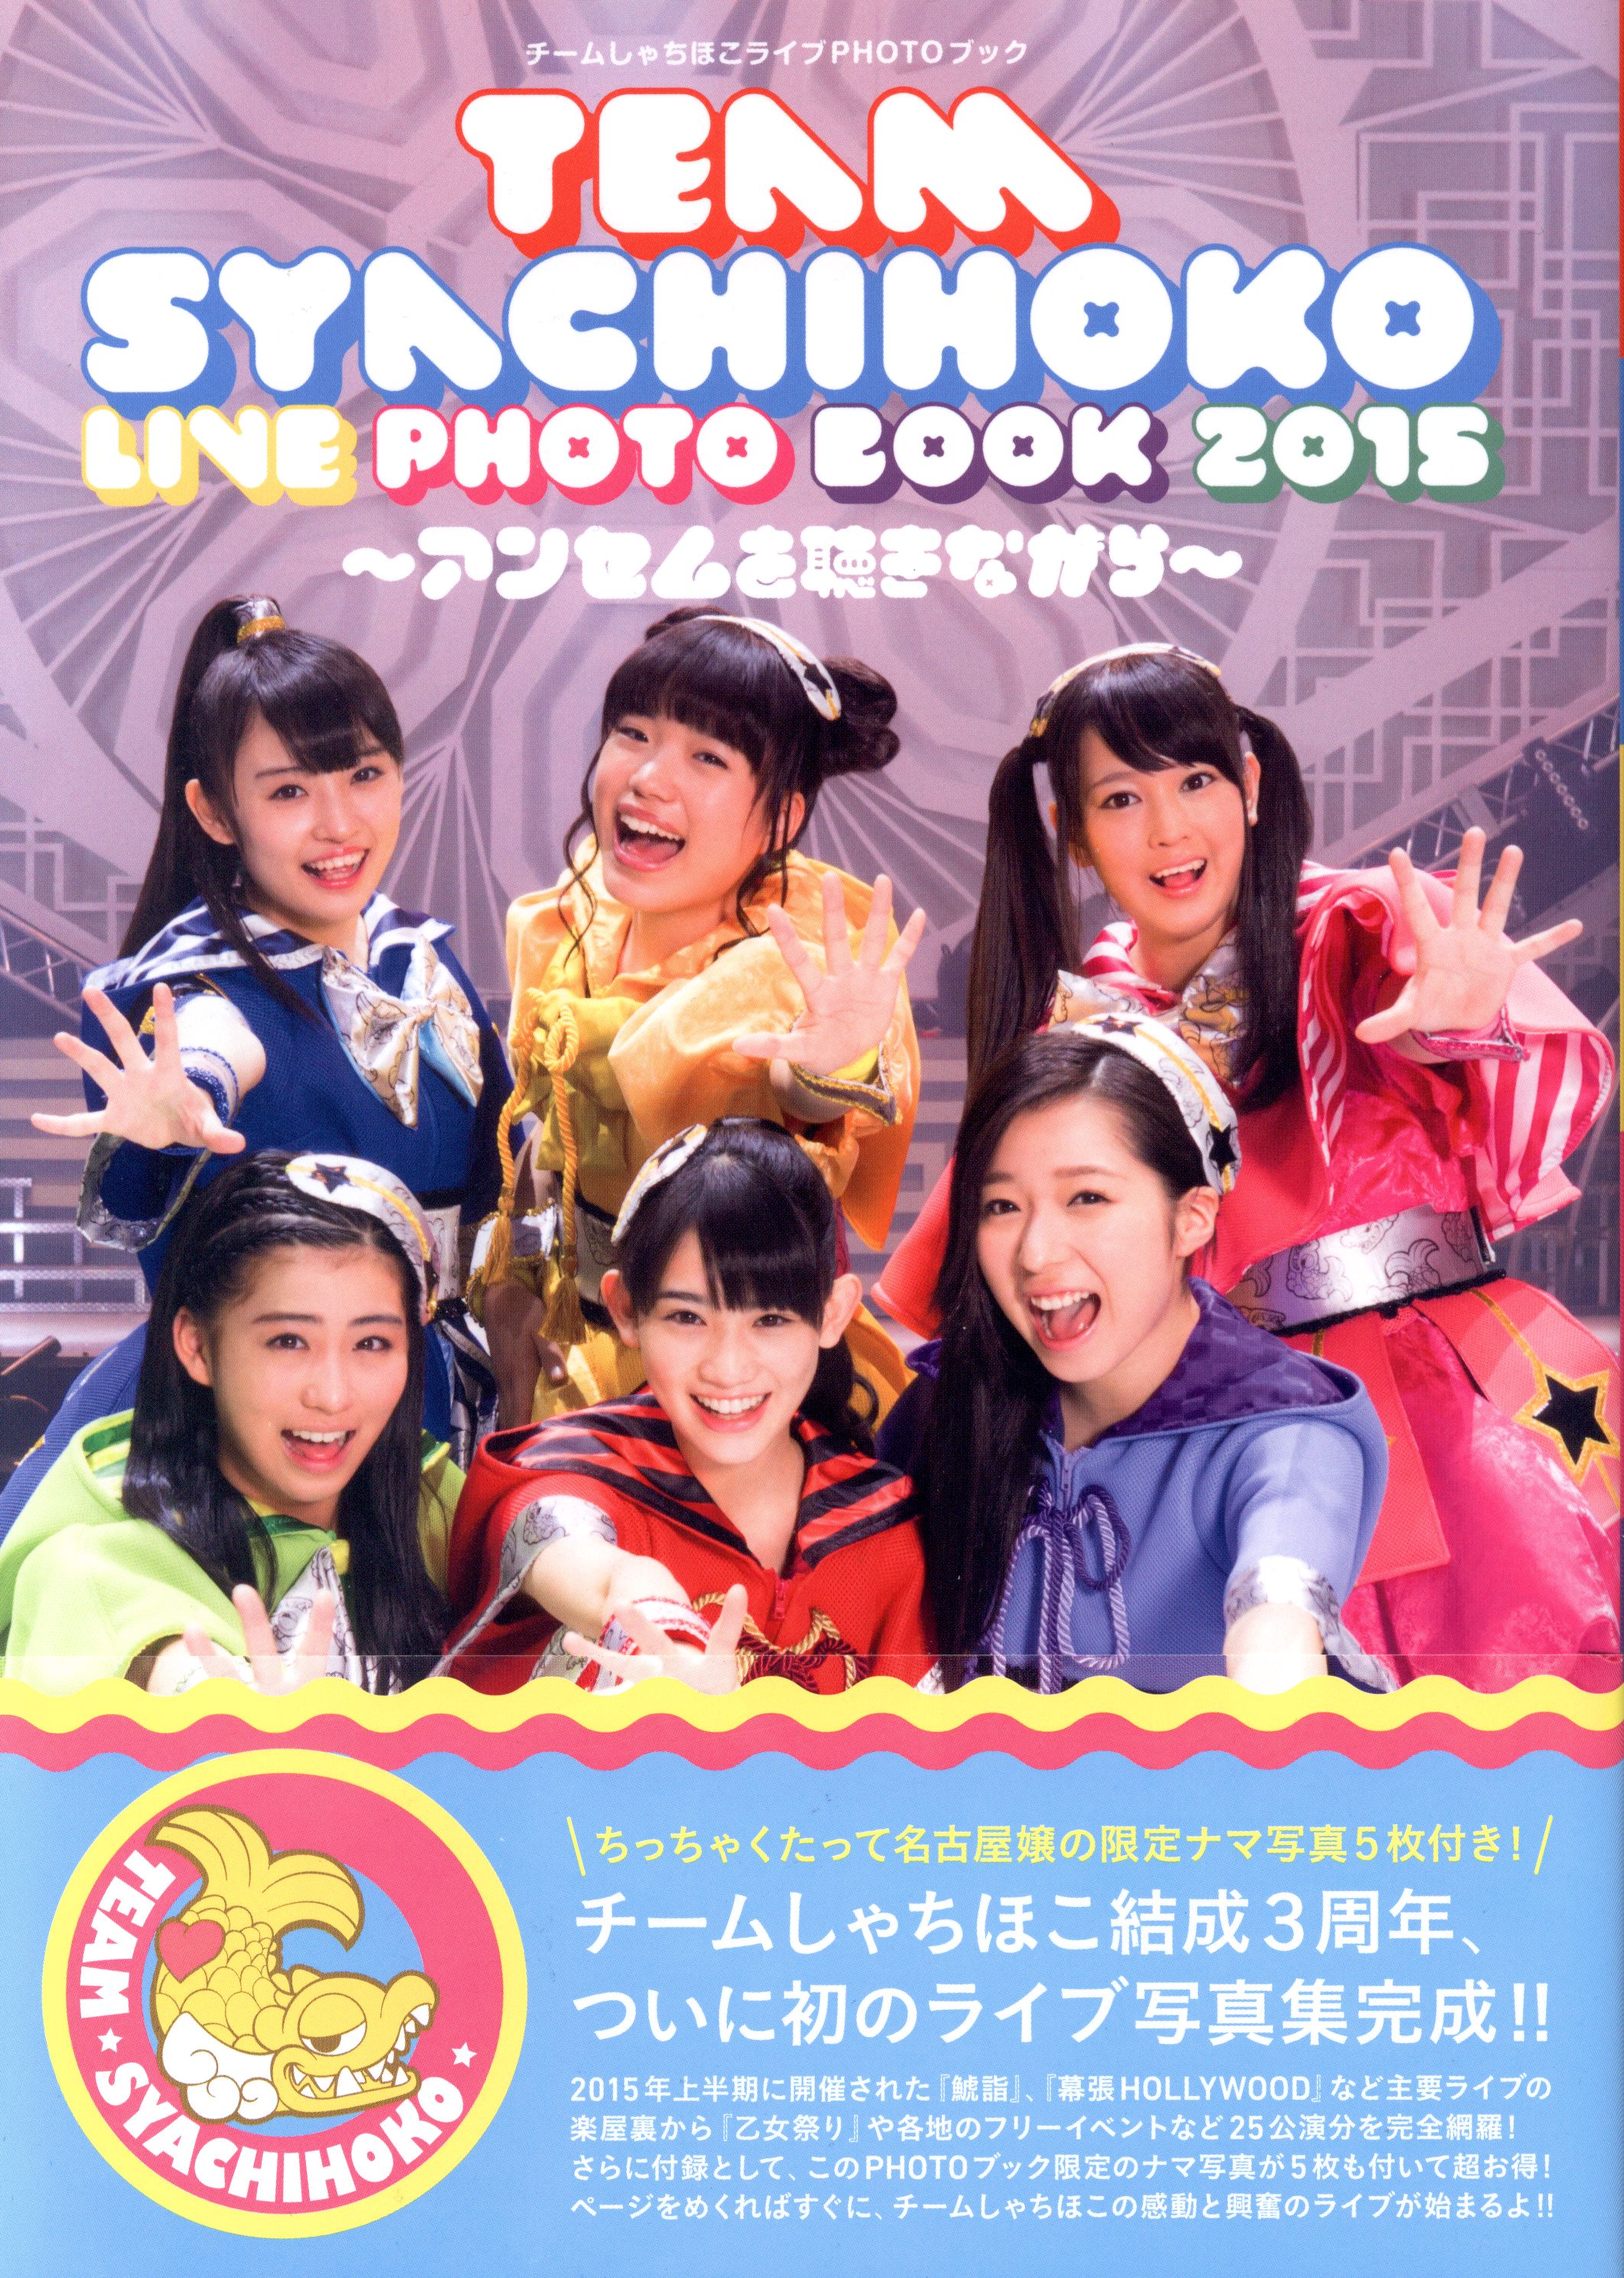 Team Shachihoko TEAM SYACHIHOKO LIVE PHOTO BOOK 2015 ~ While